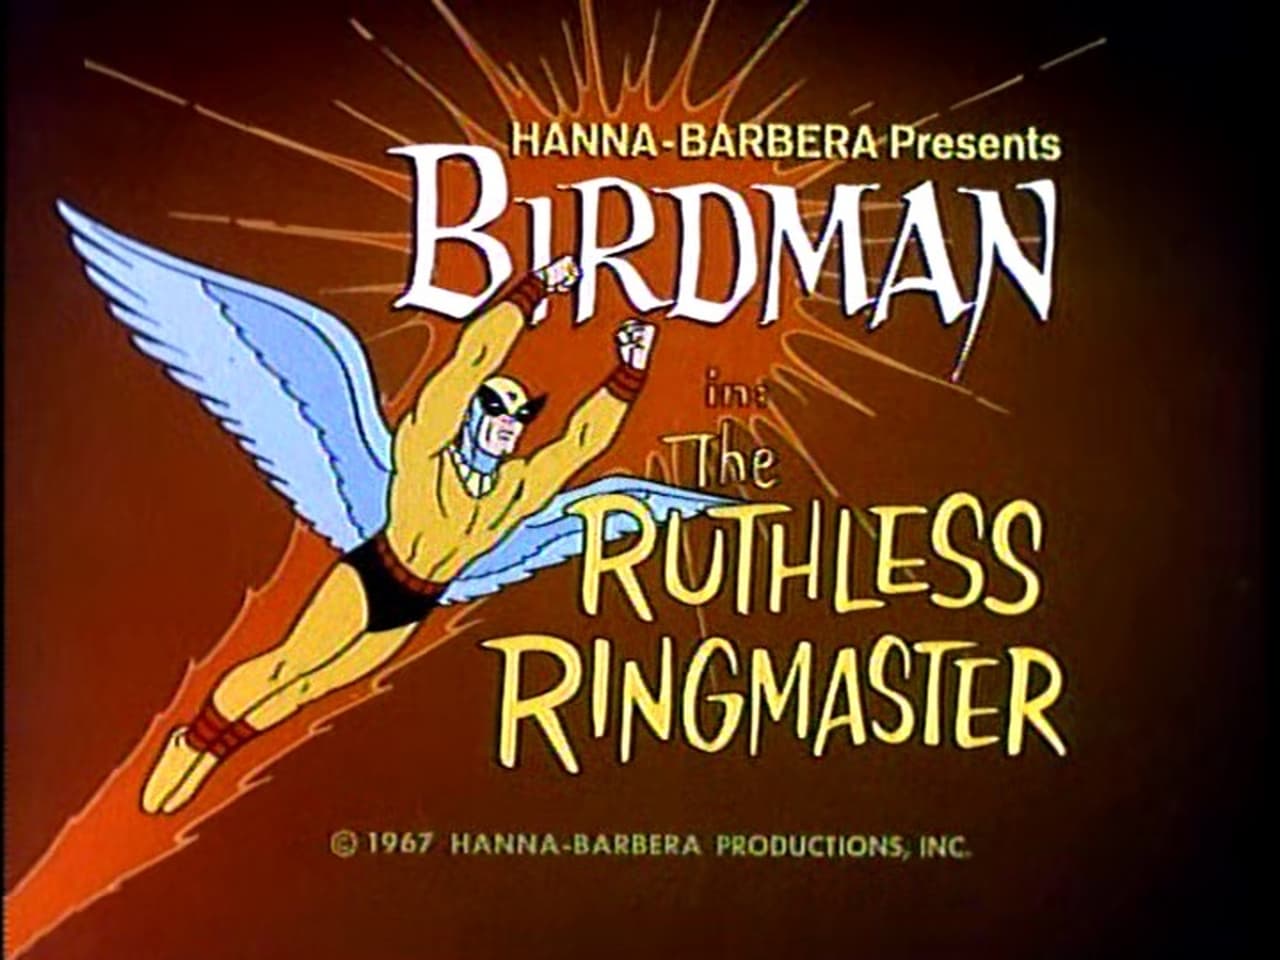 The Ruthless Ringmaster